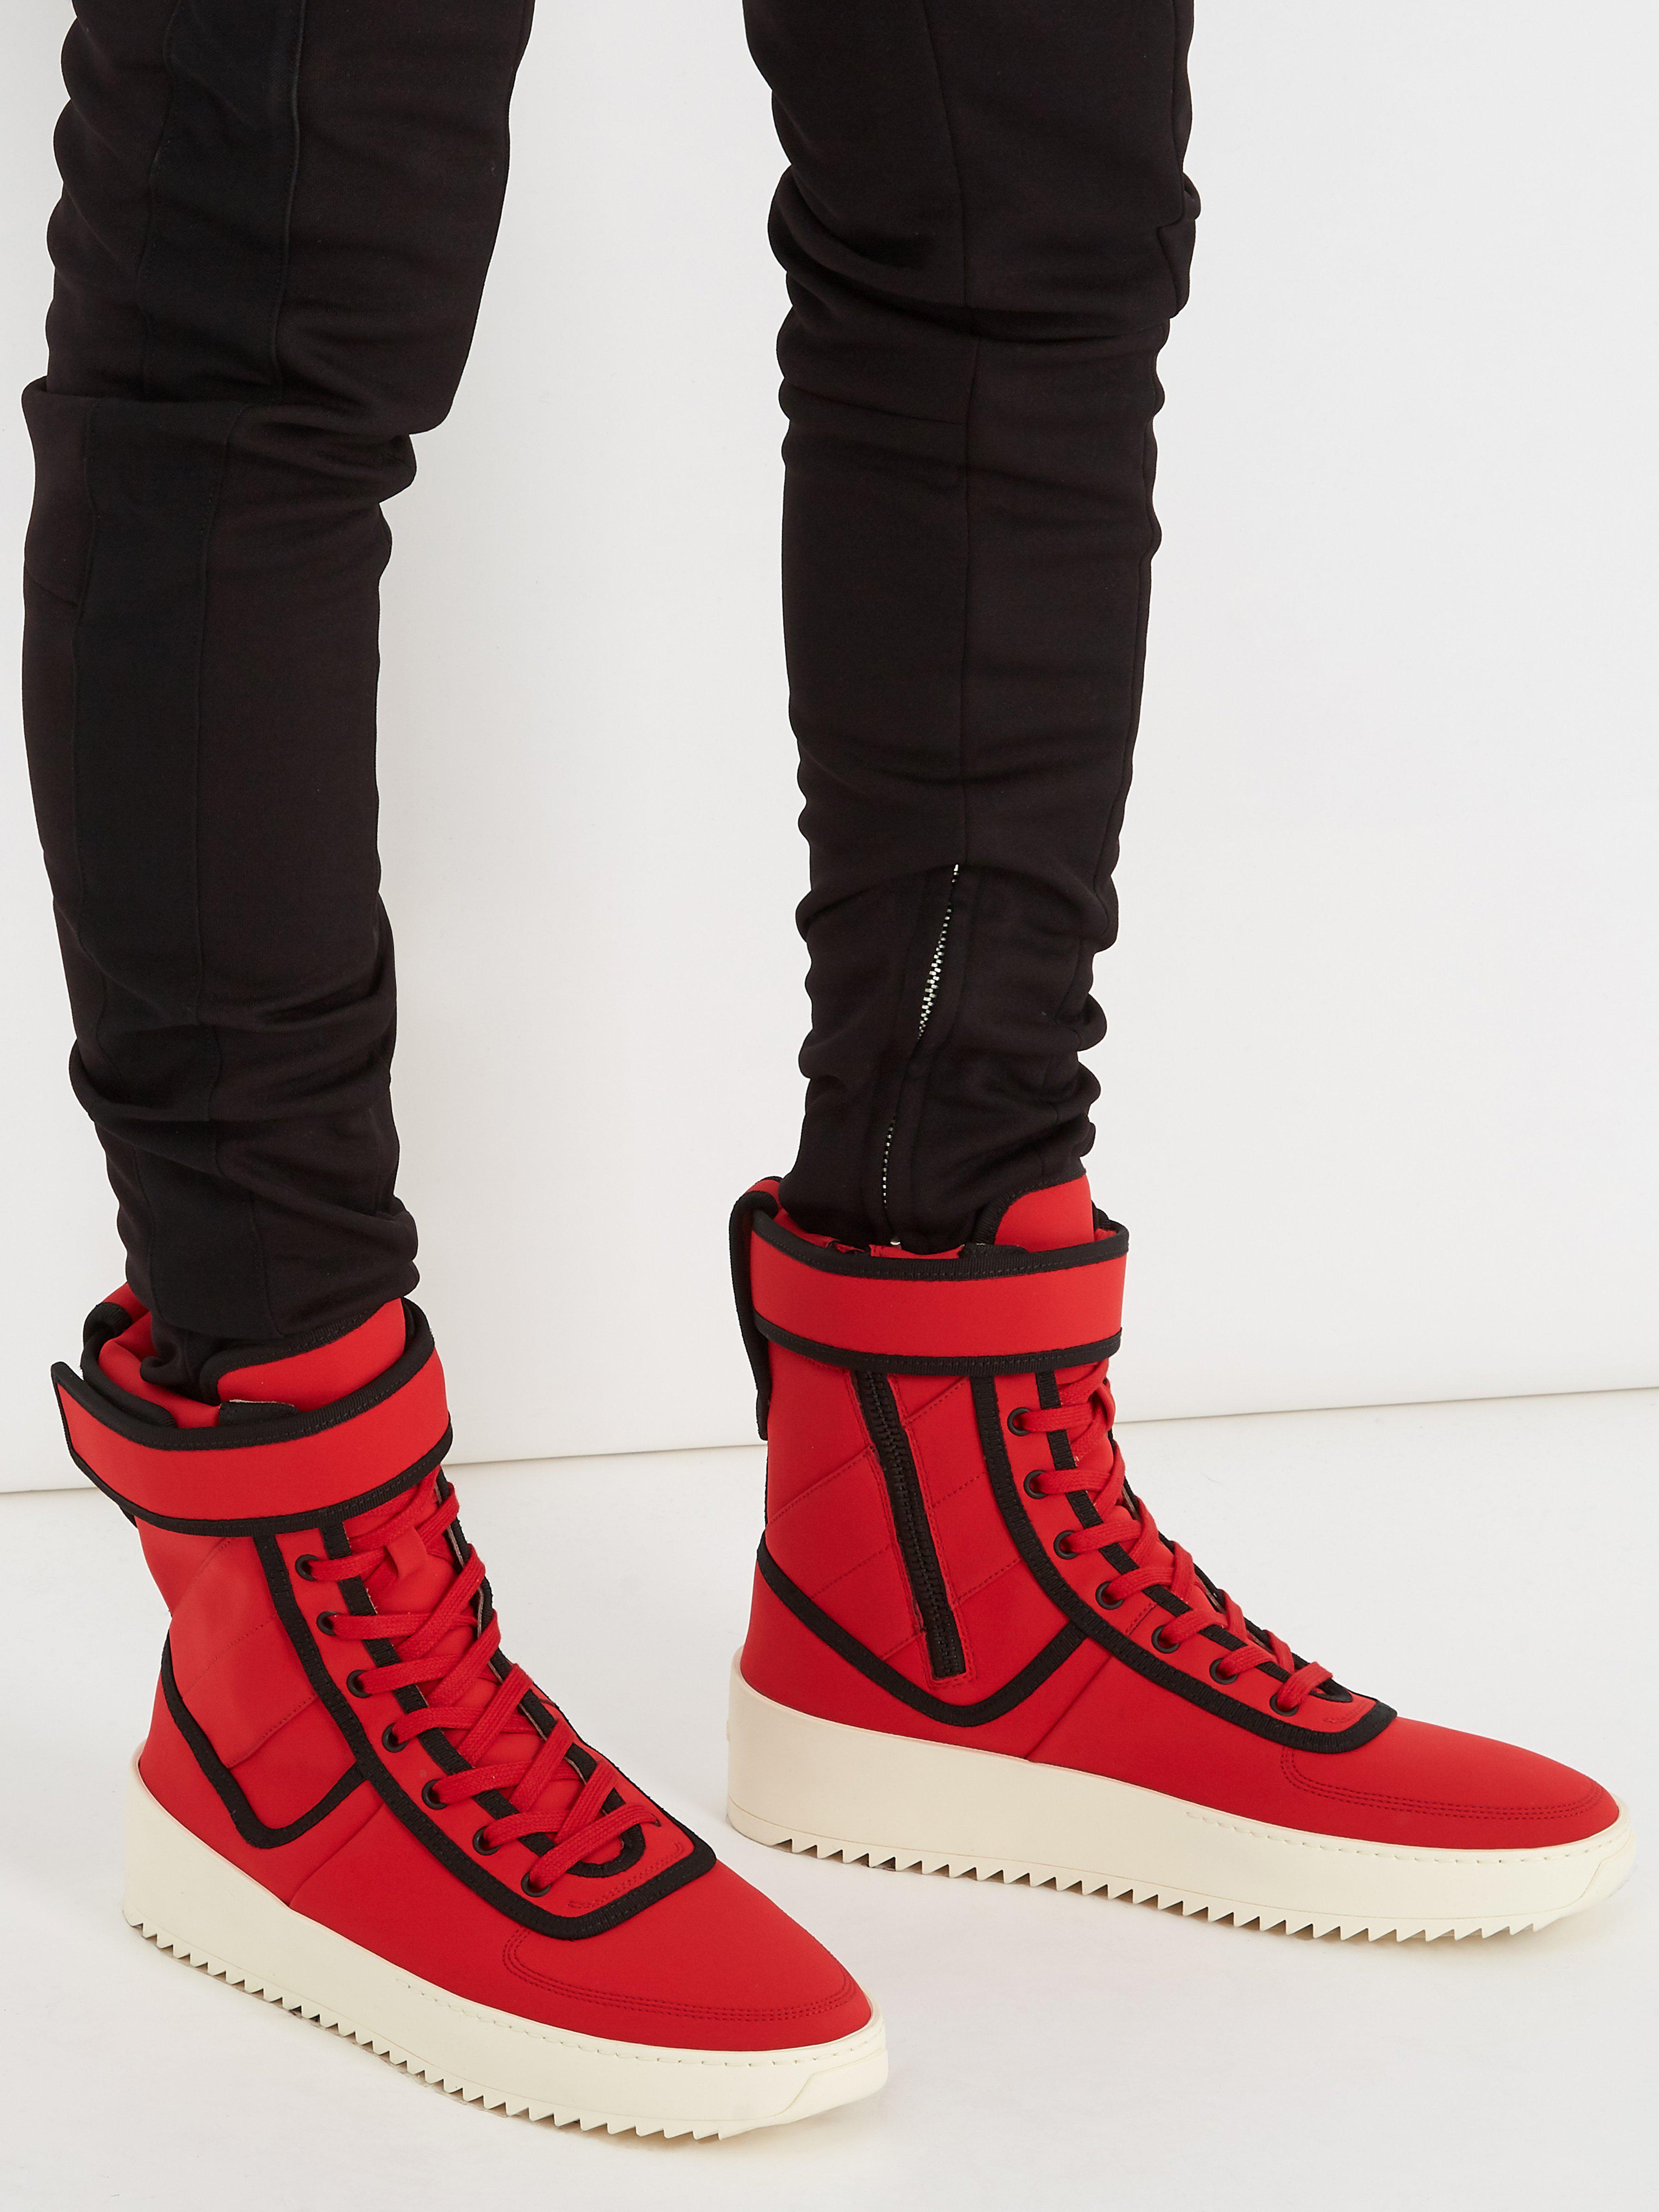 Fear Of God Neoprene Military Nylon High Top Sneakers in Red for Men - Lyst